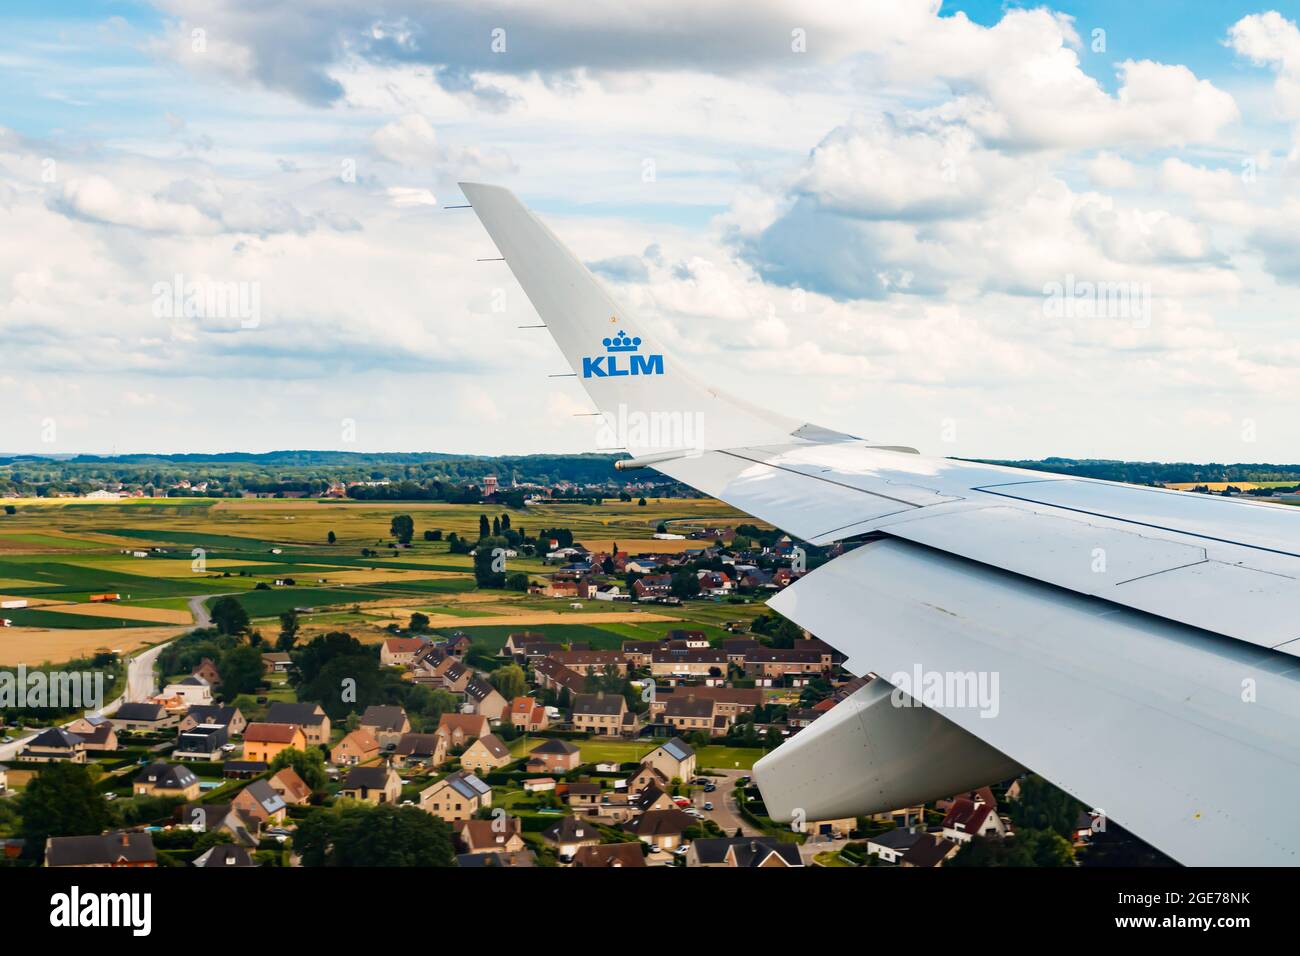 Brüssel, Belgien - 7. Juli 2021: KLM Plain Wing over Belgium. Flug von Amsterdam nach Brüssel. Die Ebene landet. Stockfoto